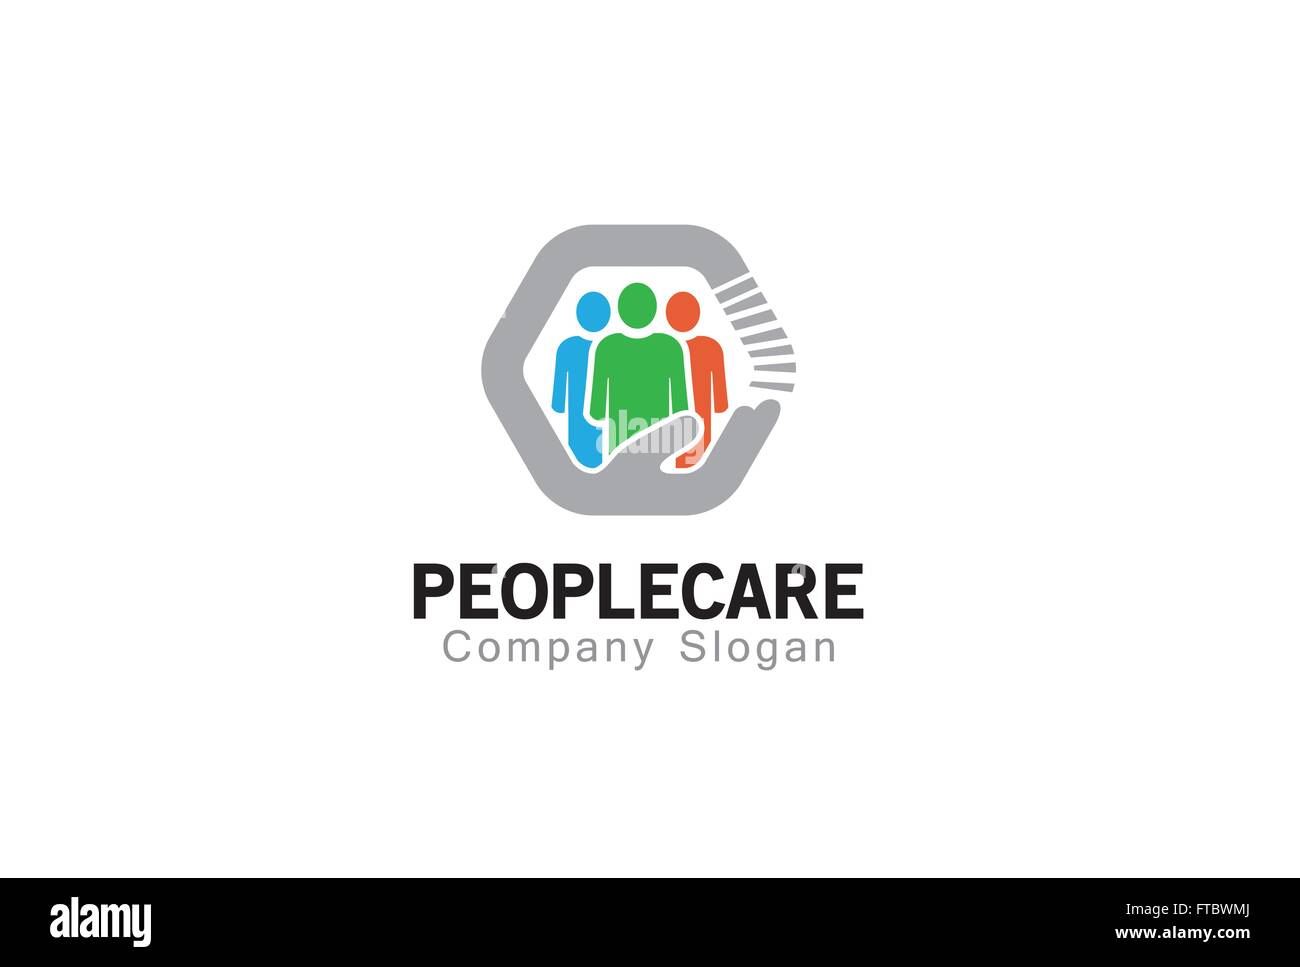 People Care Design Illustration Stock Vector